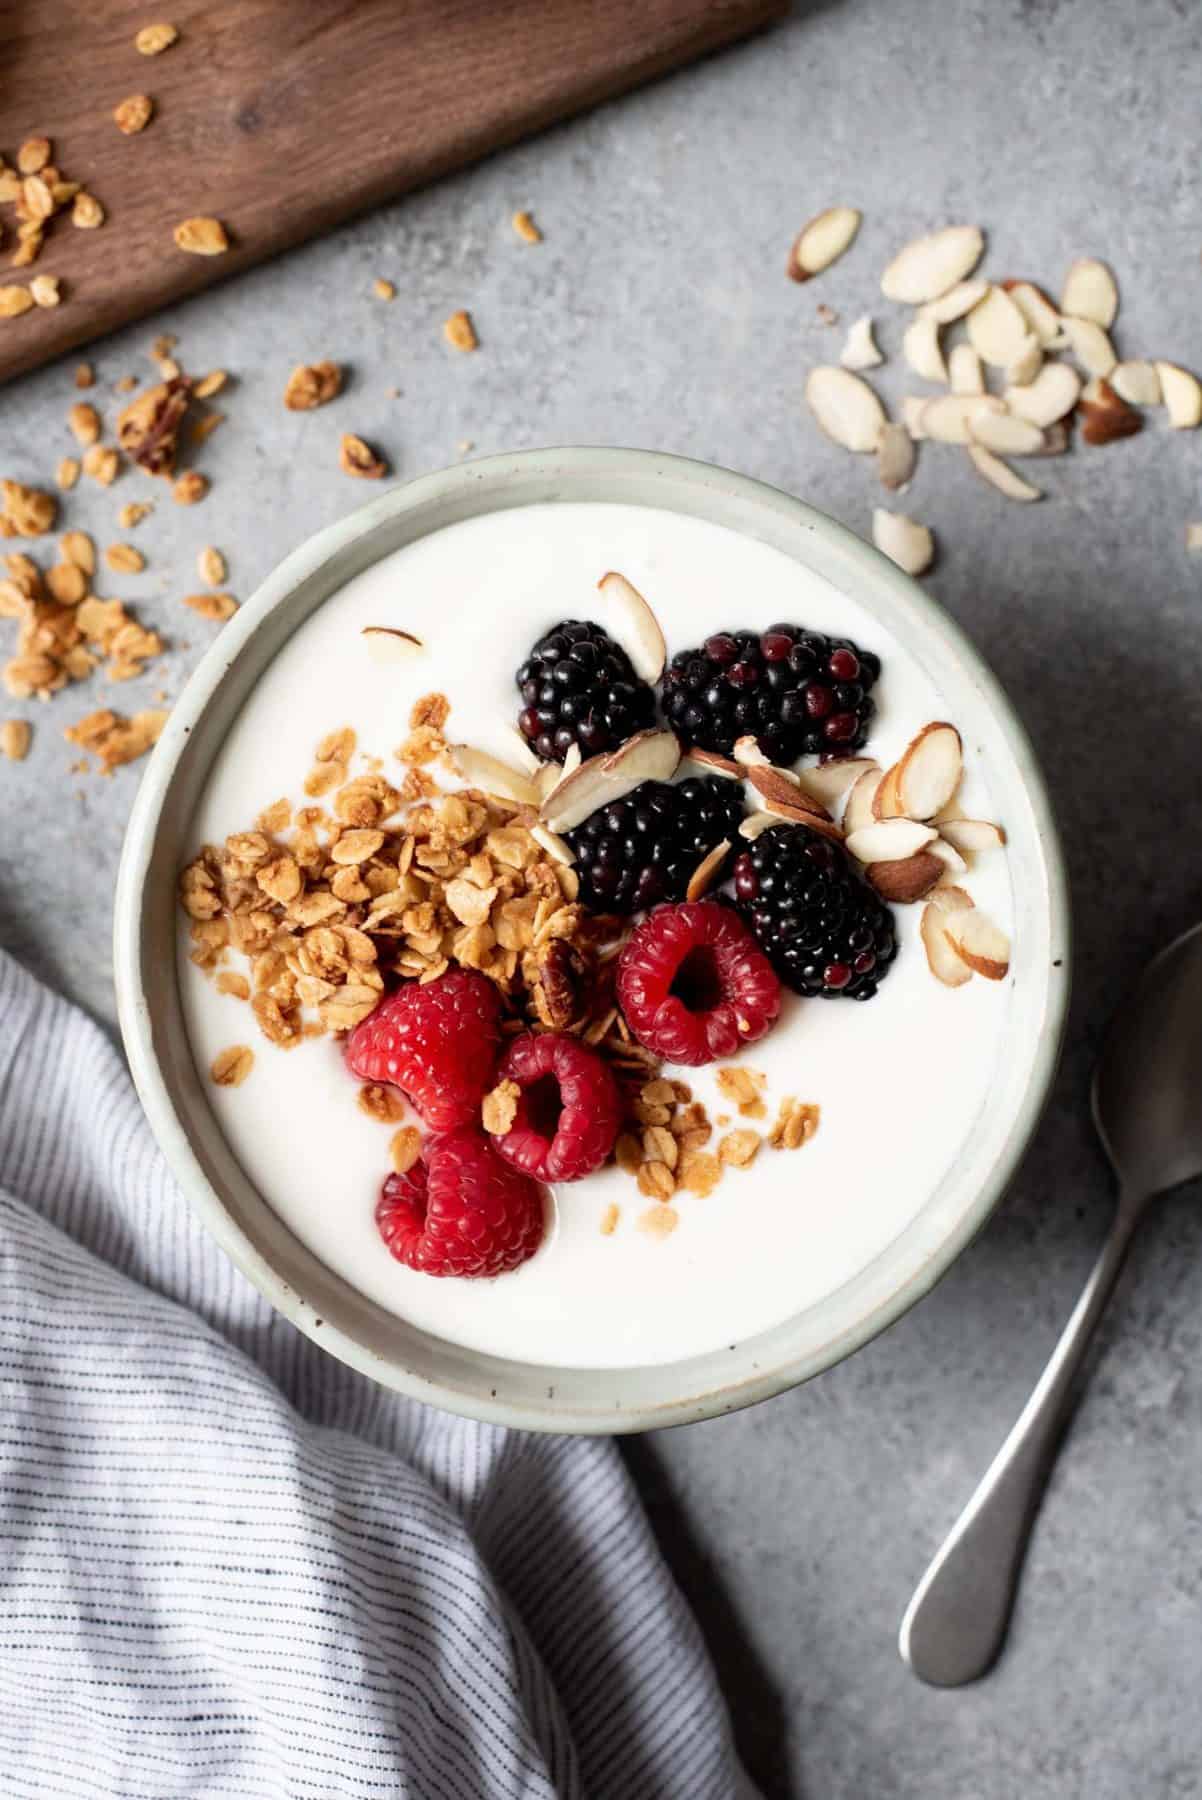 7haofang 10g Yogurt Yeast Starter Natural 20 Types of Probiotics Home Made Lactobacillus